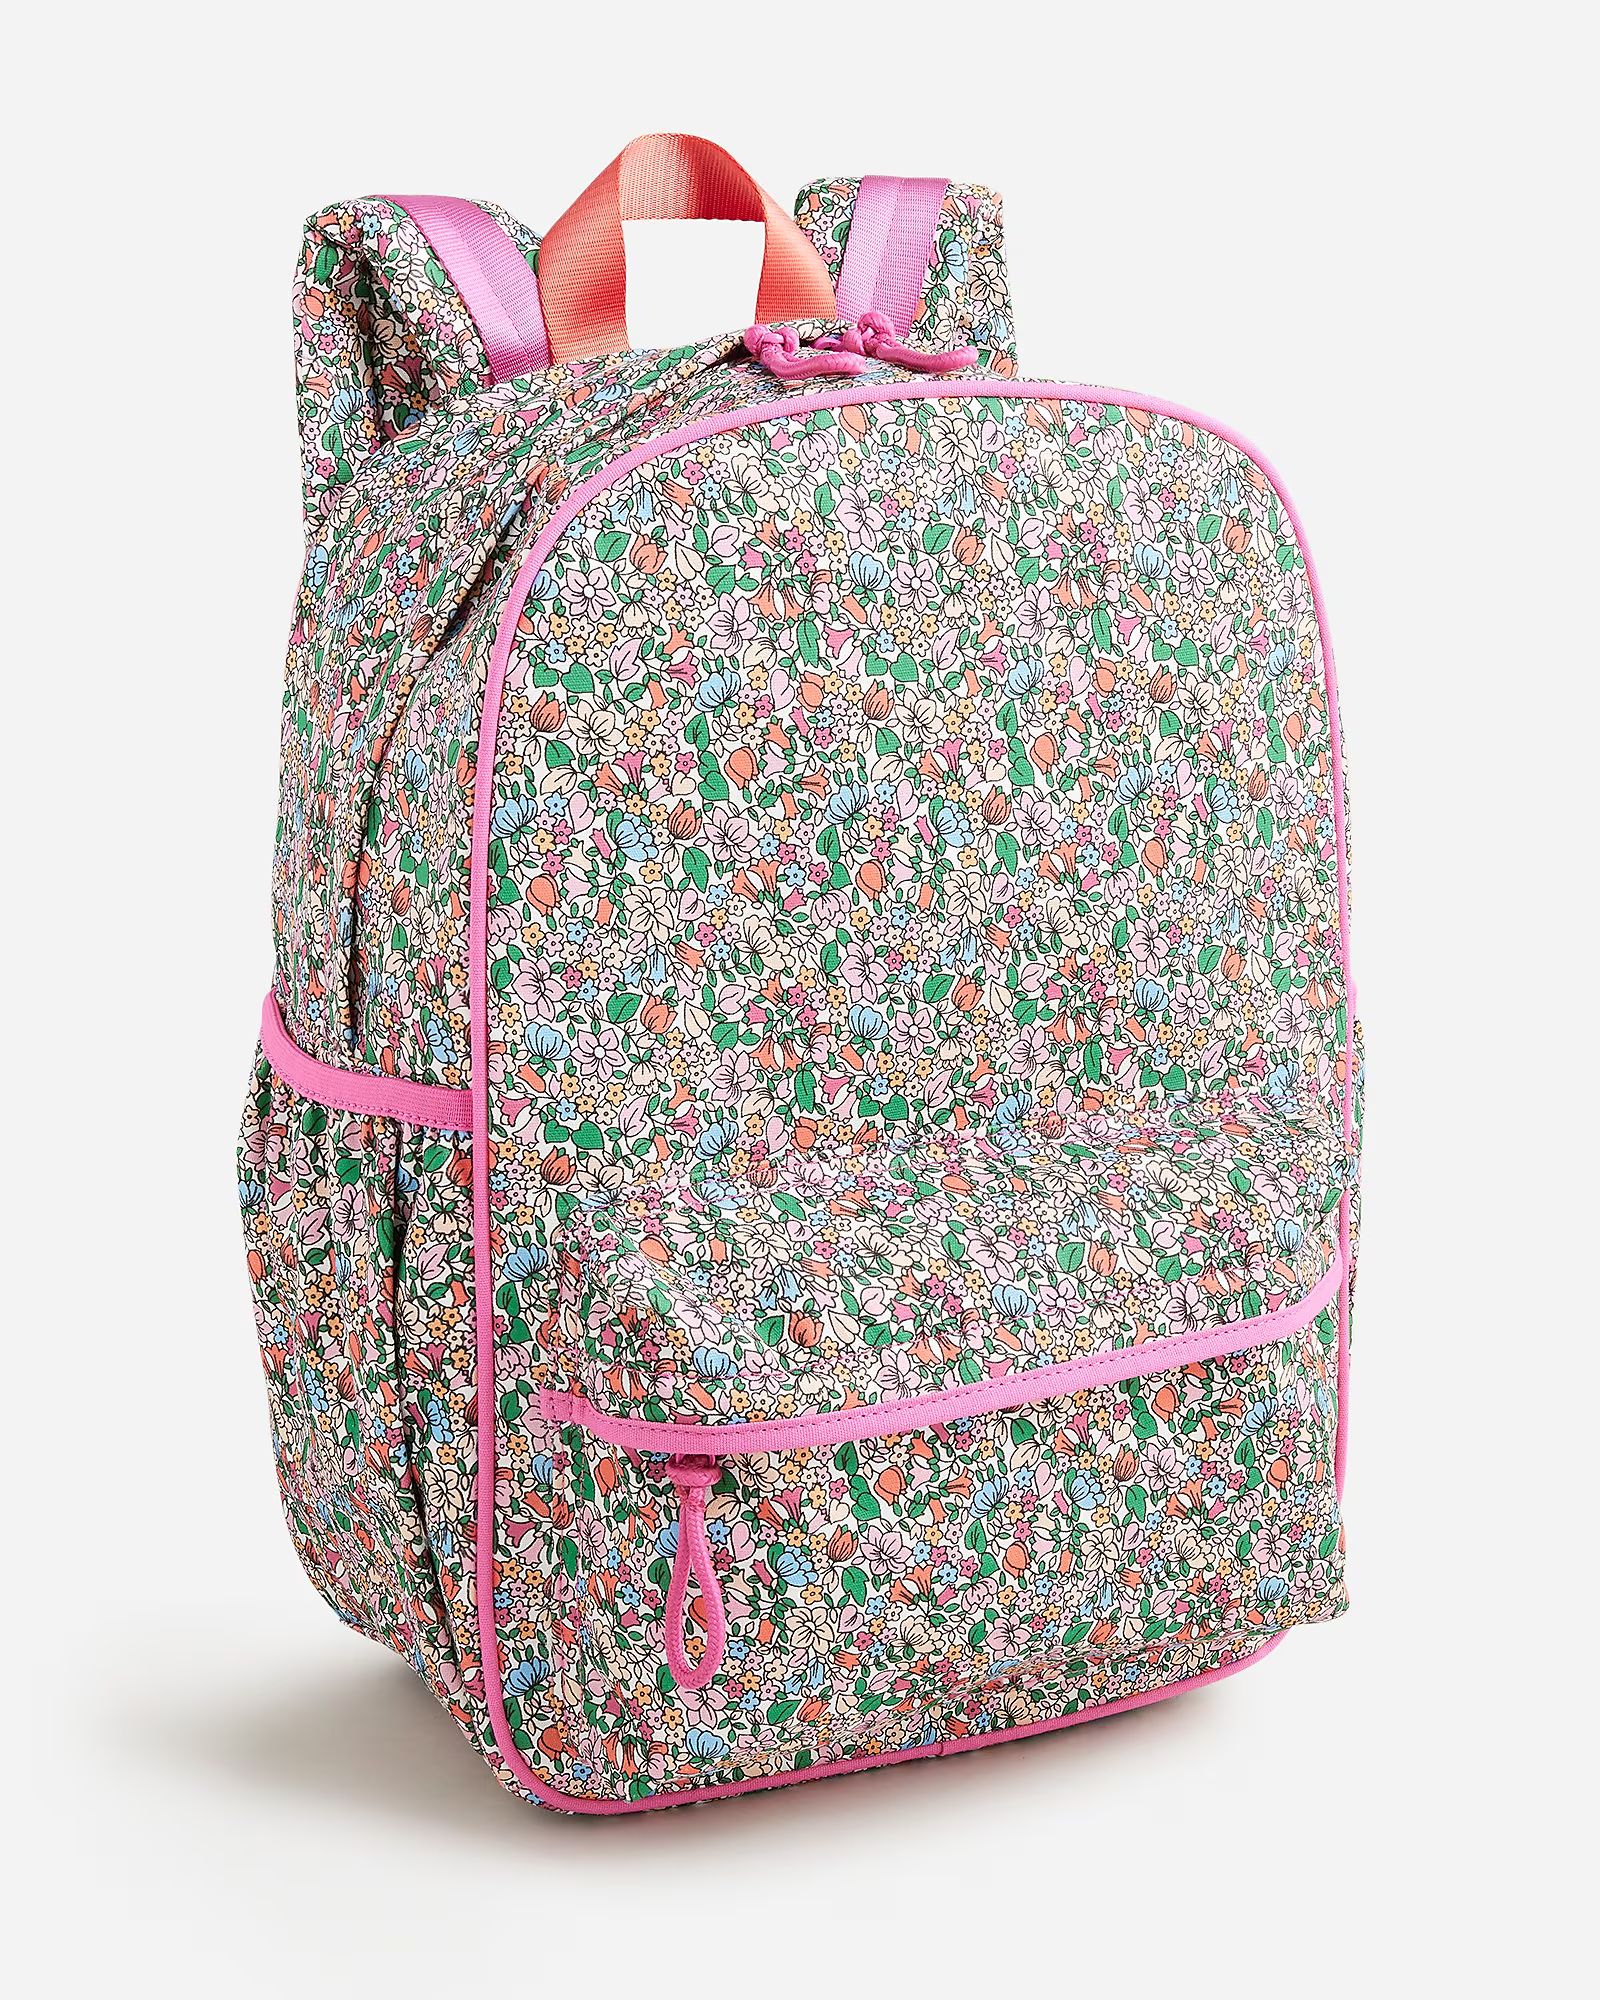 Girls' backpack in floral print | J.Crew US